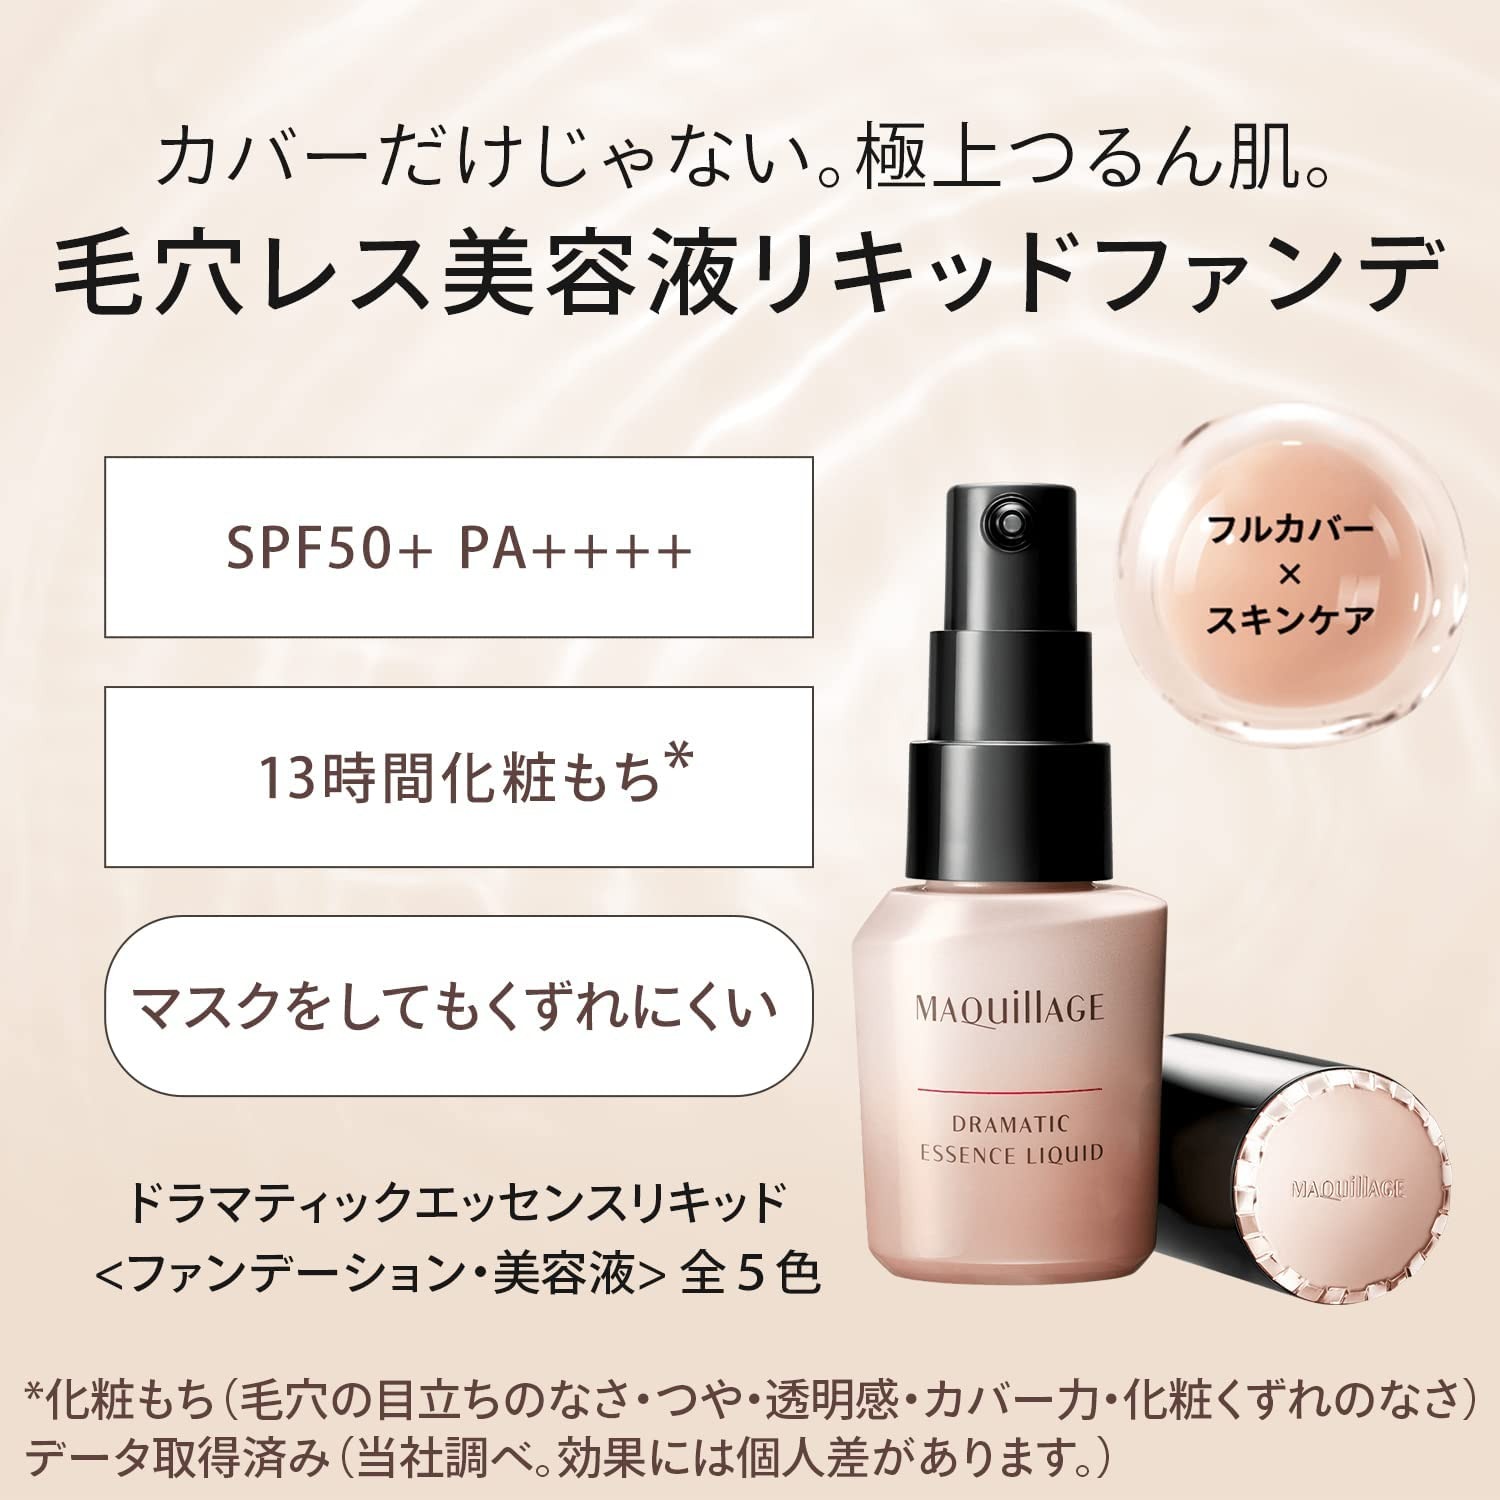 shiseido maquillage dramatic essence liquid foundation spf50 pa